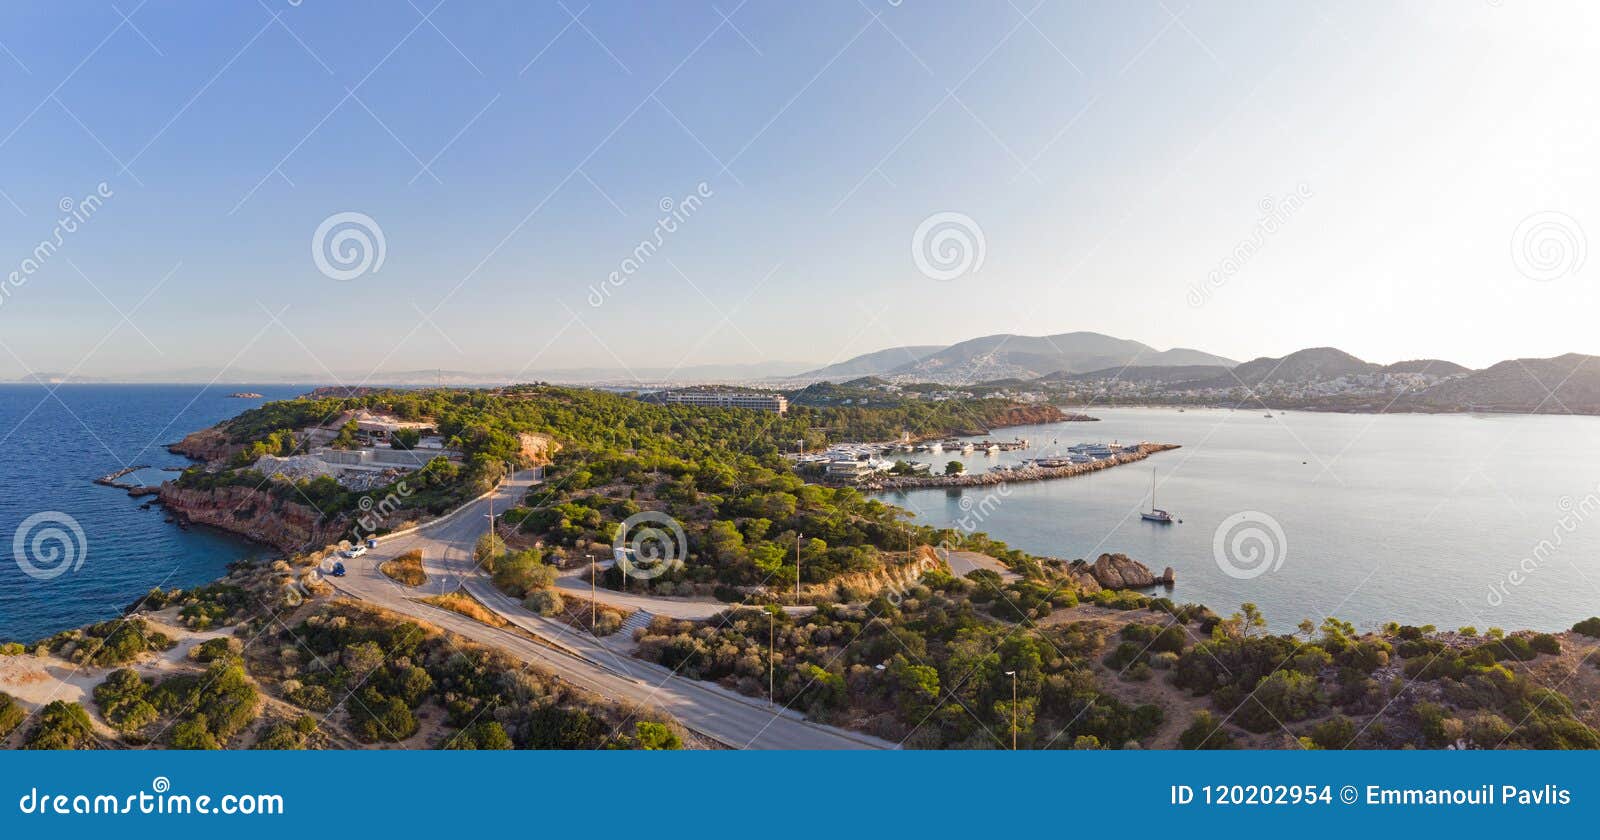 peninsula of kavouri, athens - greece.